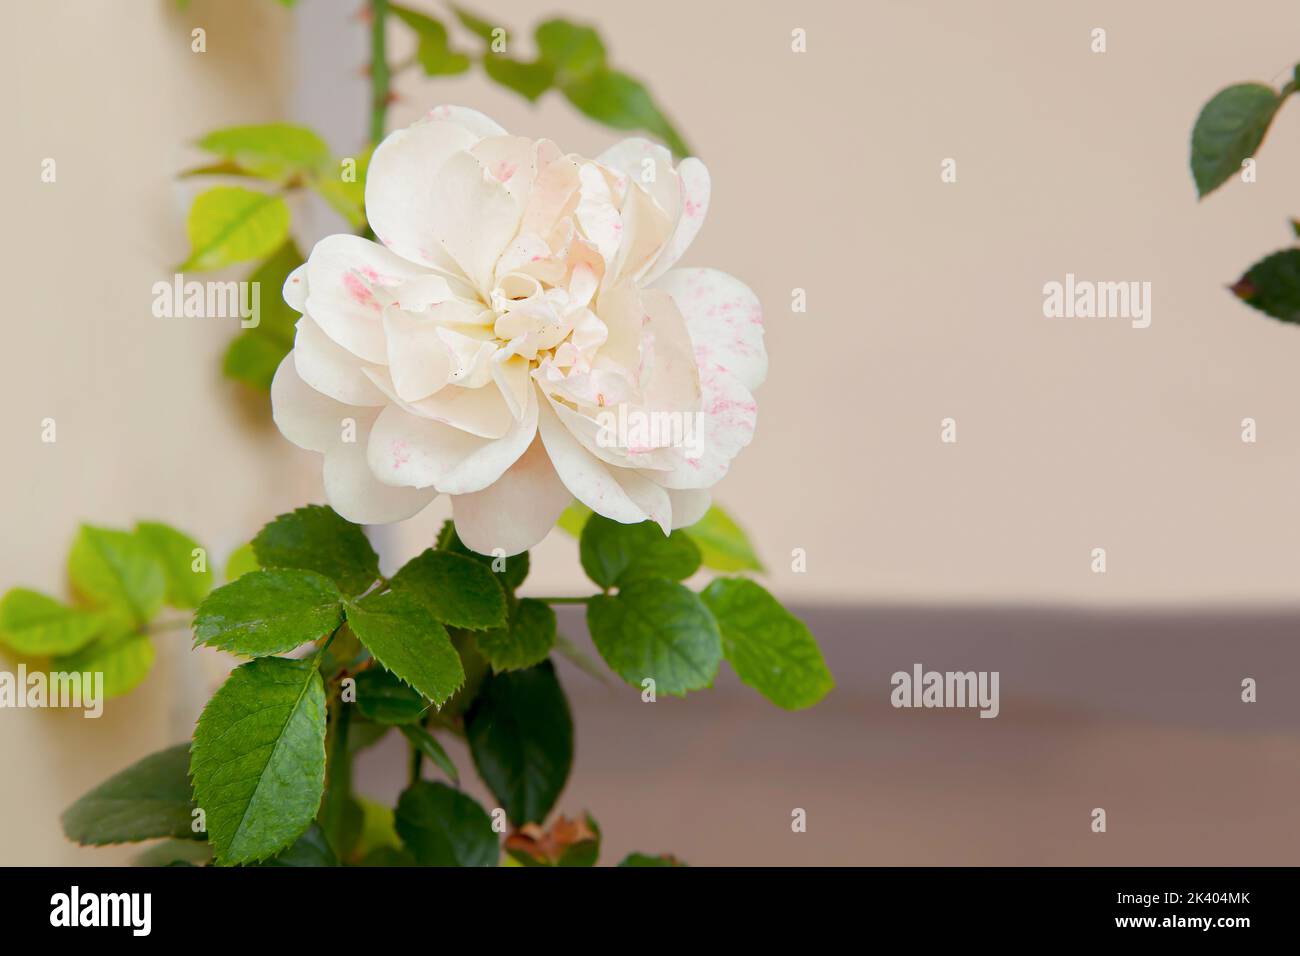 White shrub rose also know as Rosa Alba Maxima blooming in the garden Stock Photo